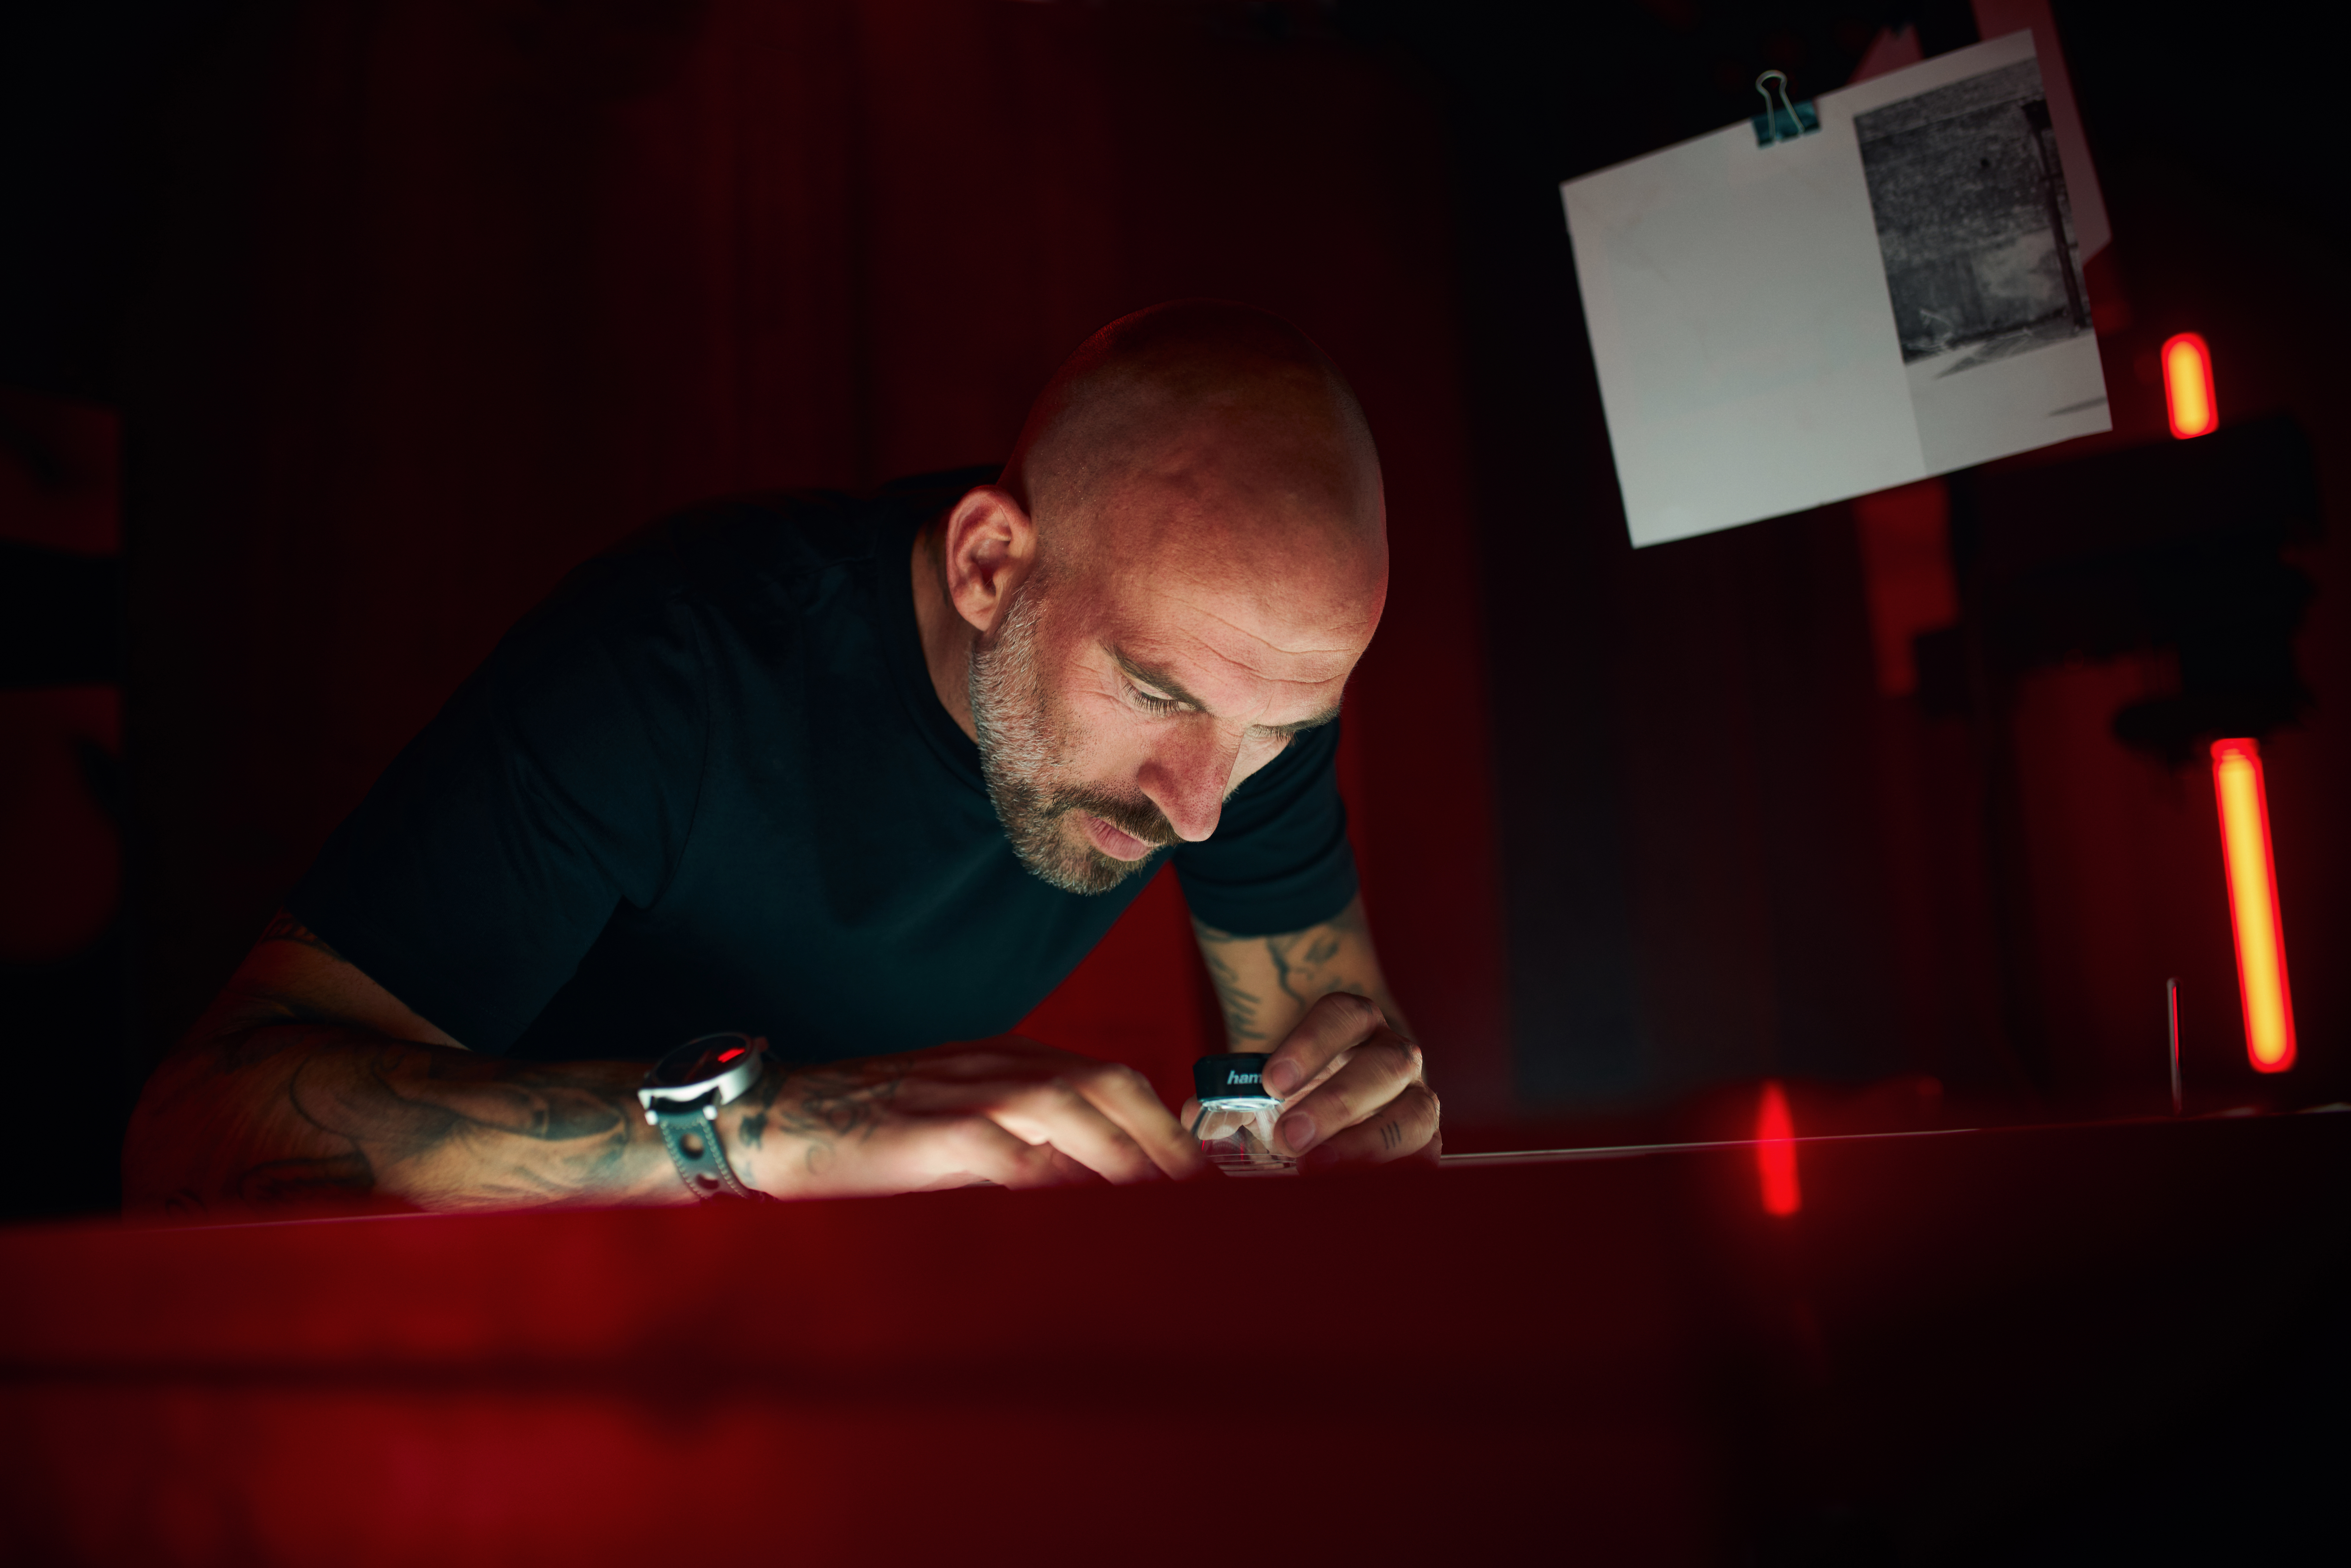 Bart Kuykens at work in his darkroom for photo development